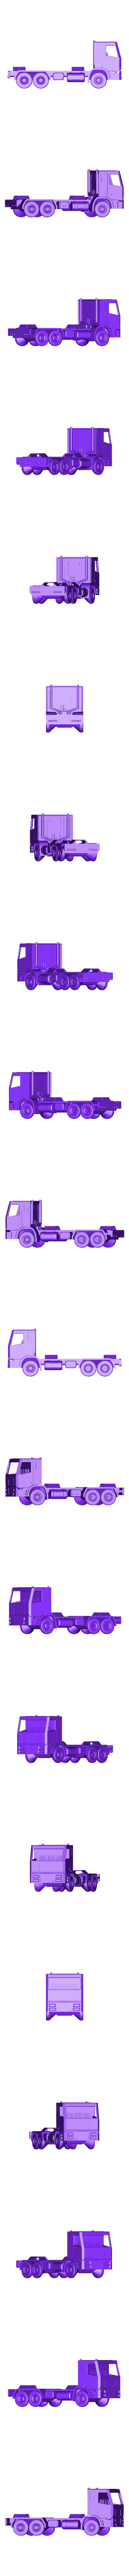 Truck_Base.stl Download free STL file Print-in-Place Modular Truck - Base • Object to 3D print, budinavit